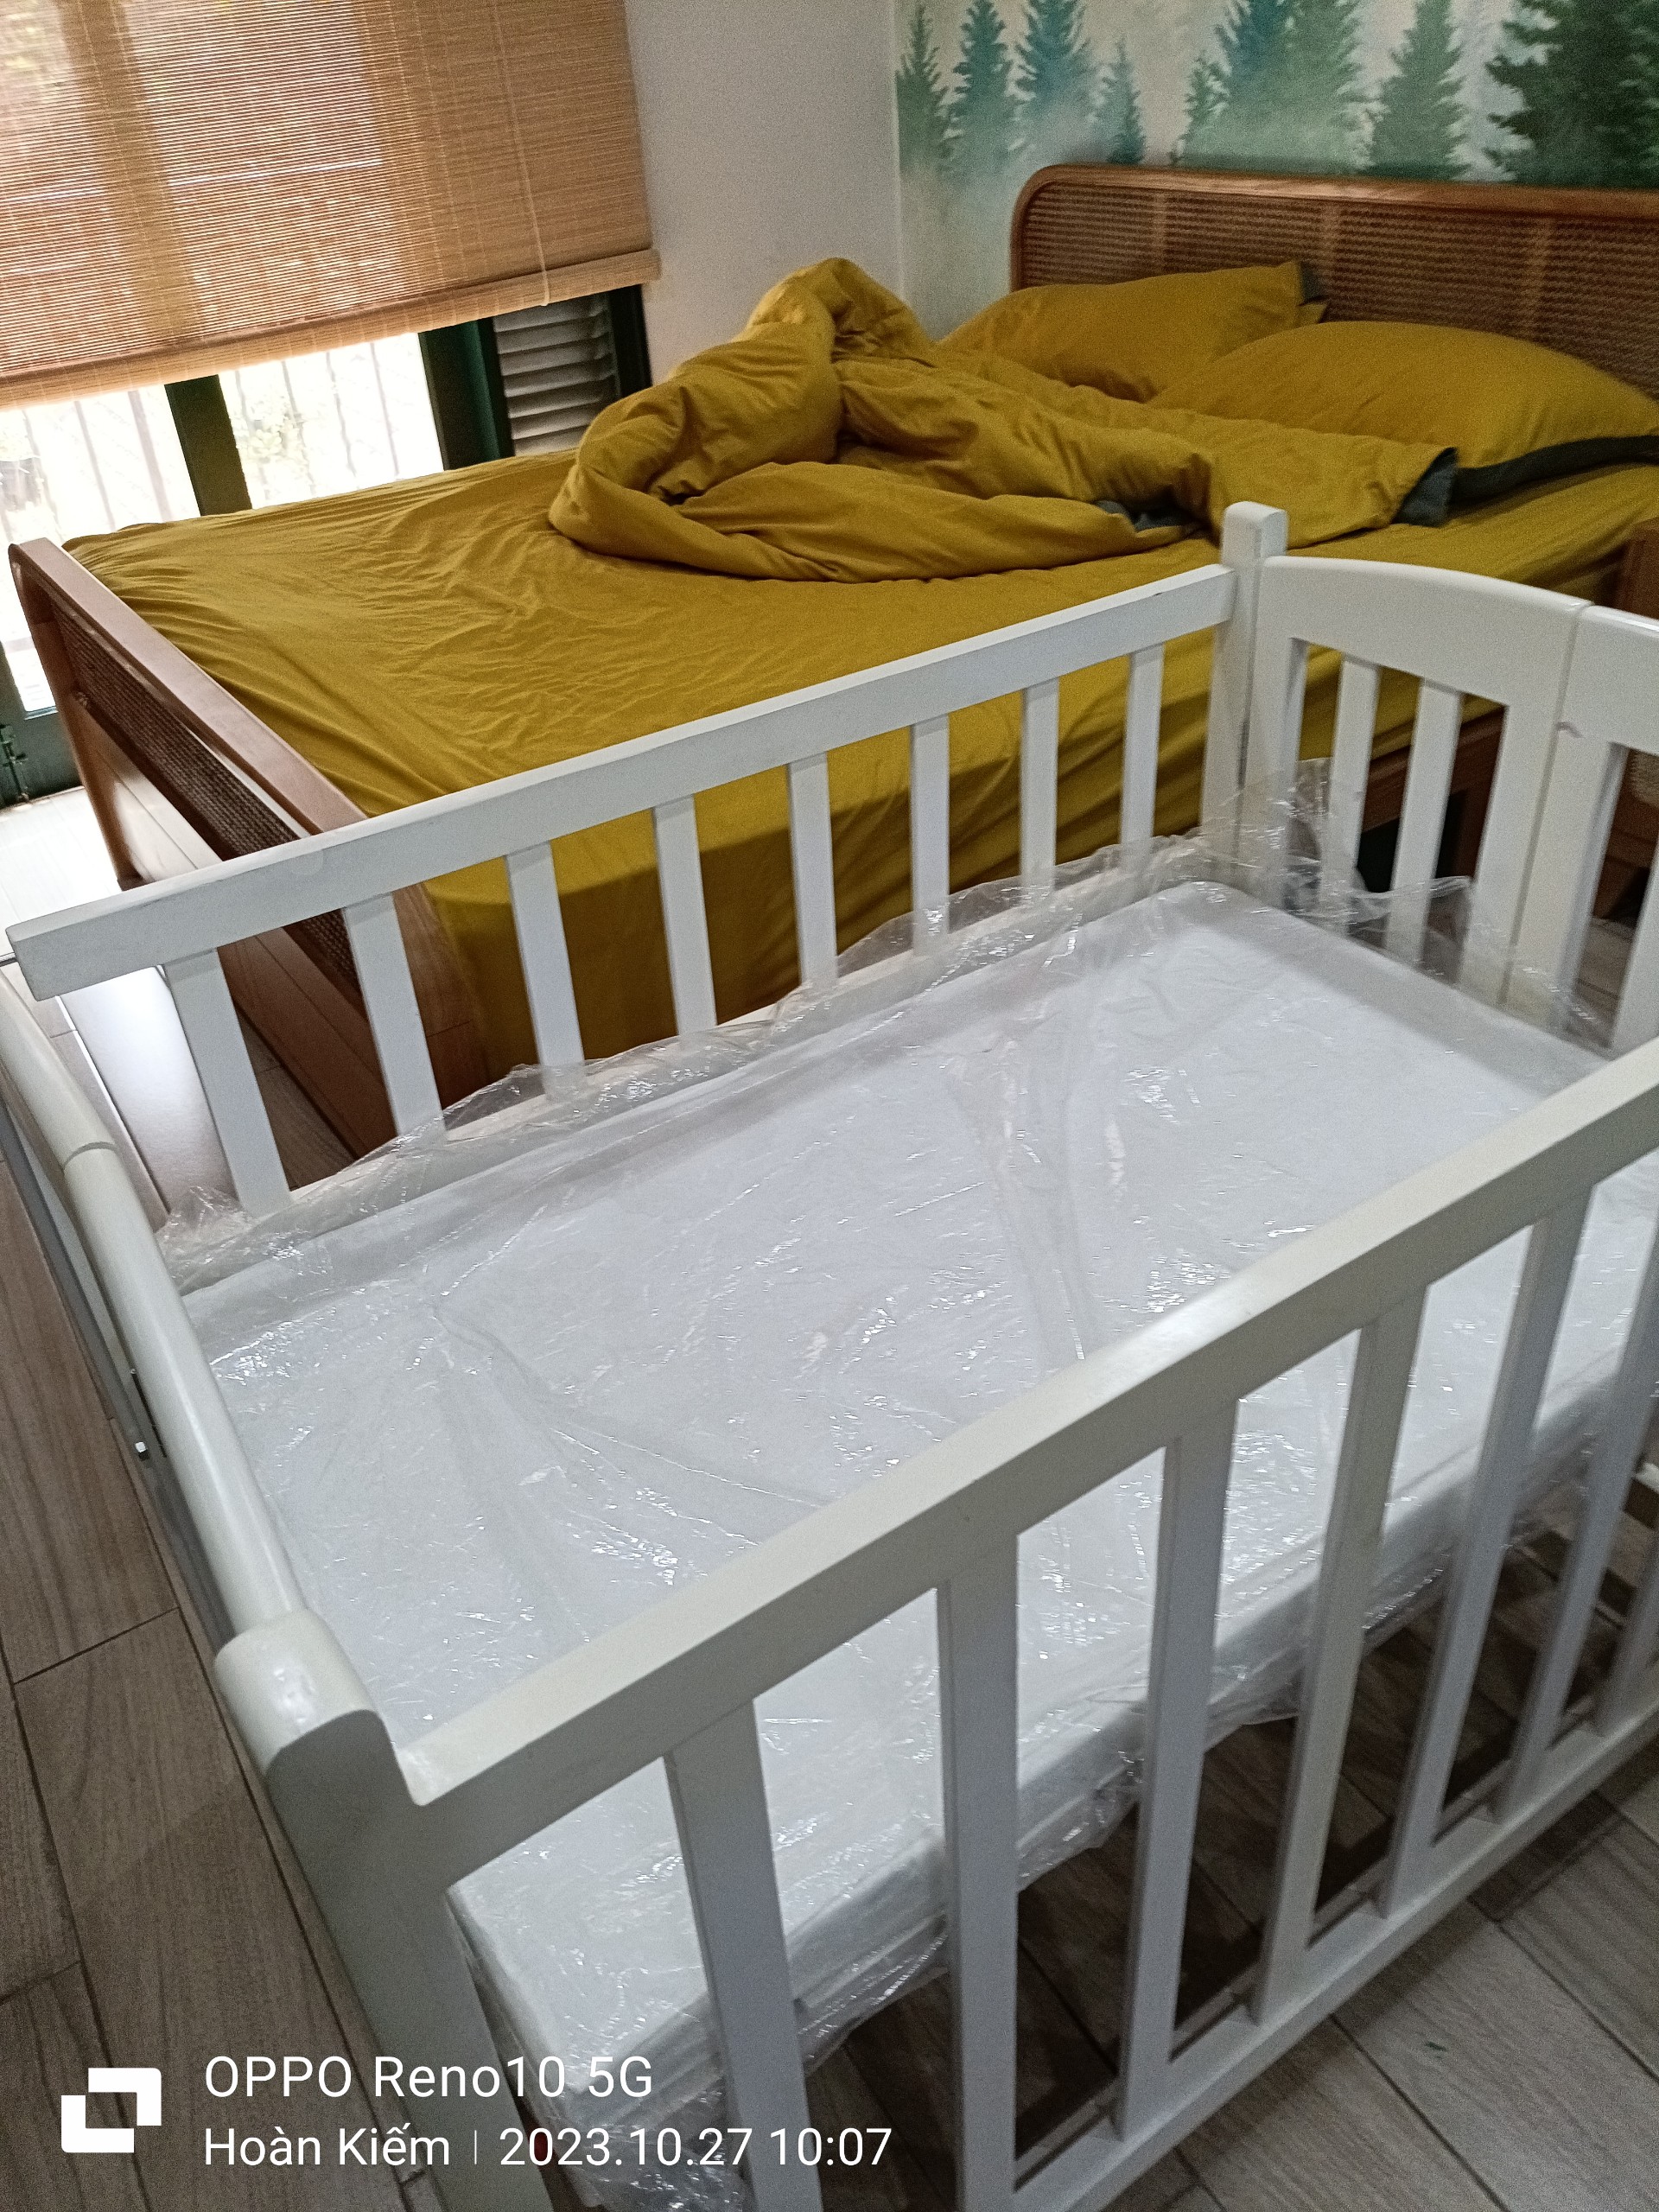 Rental of baby cot